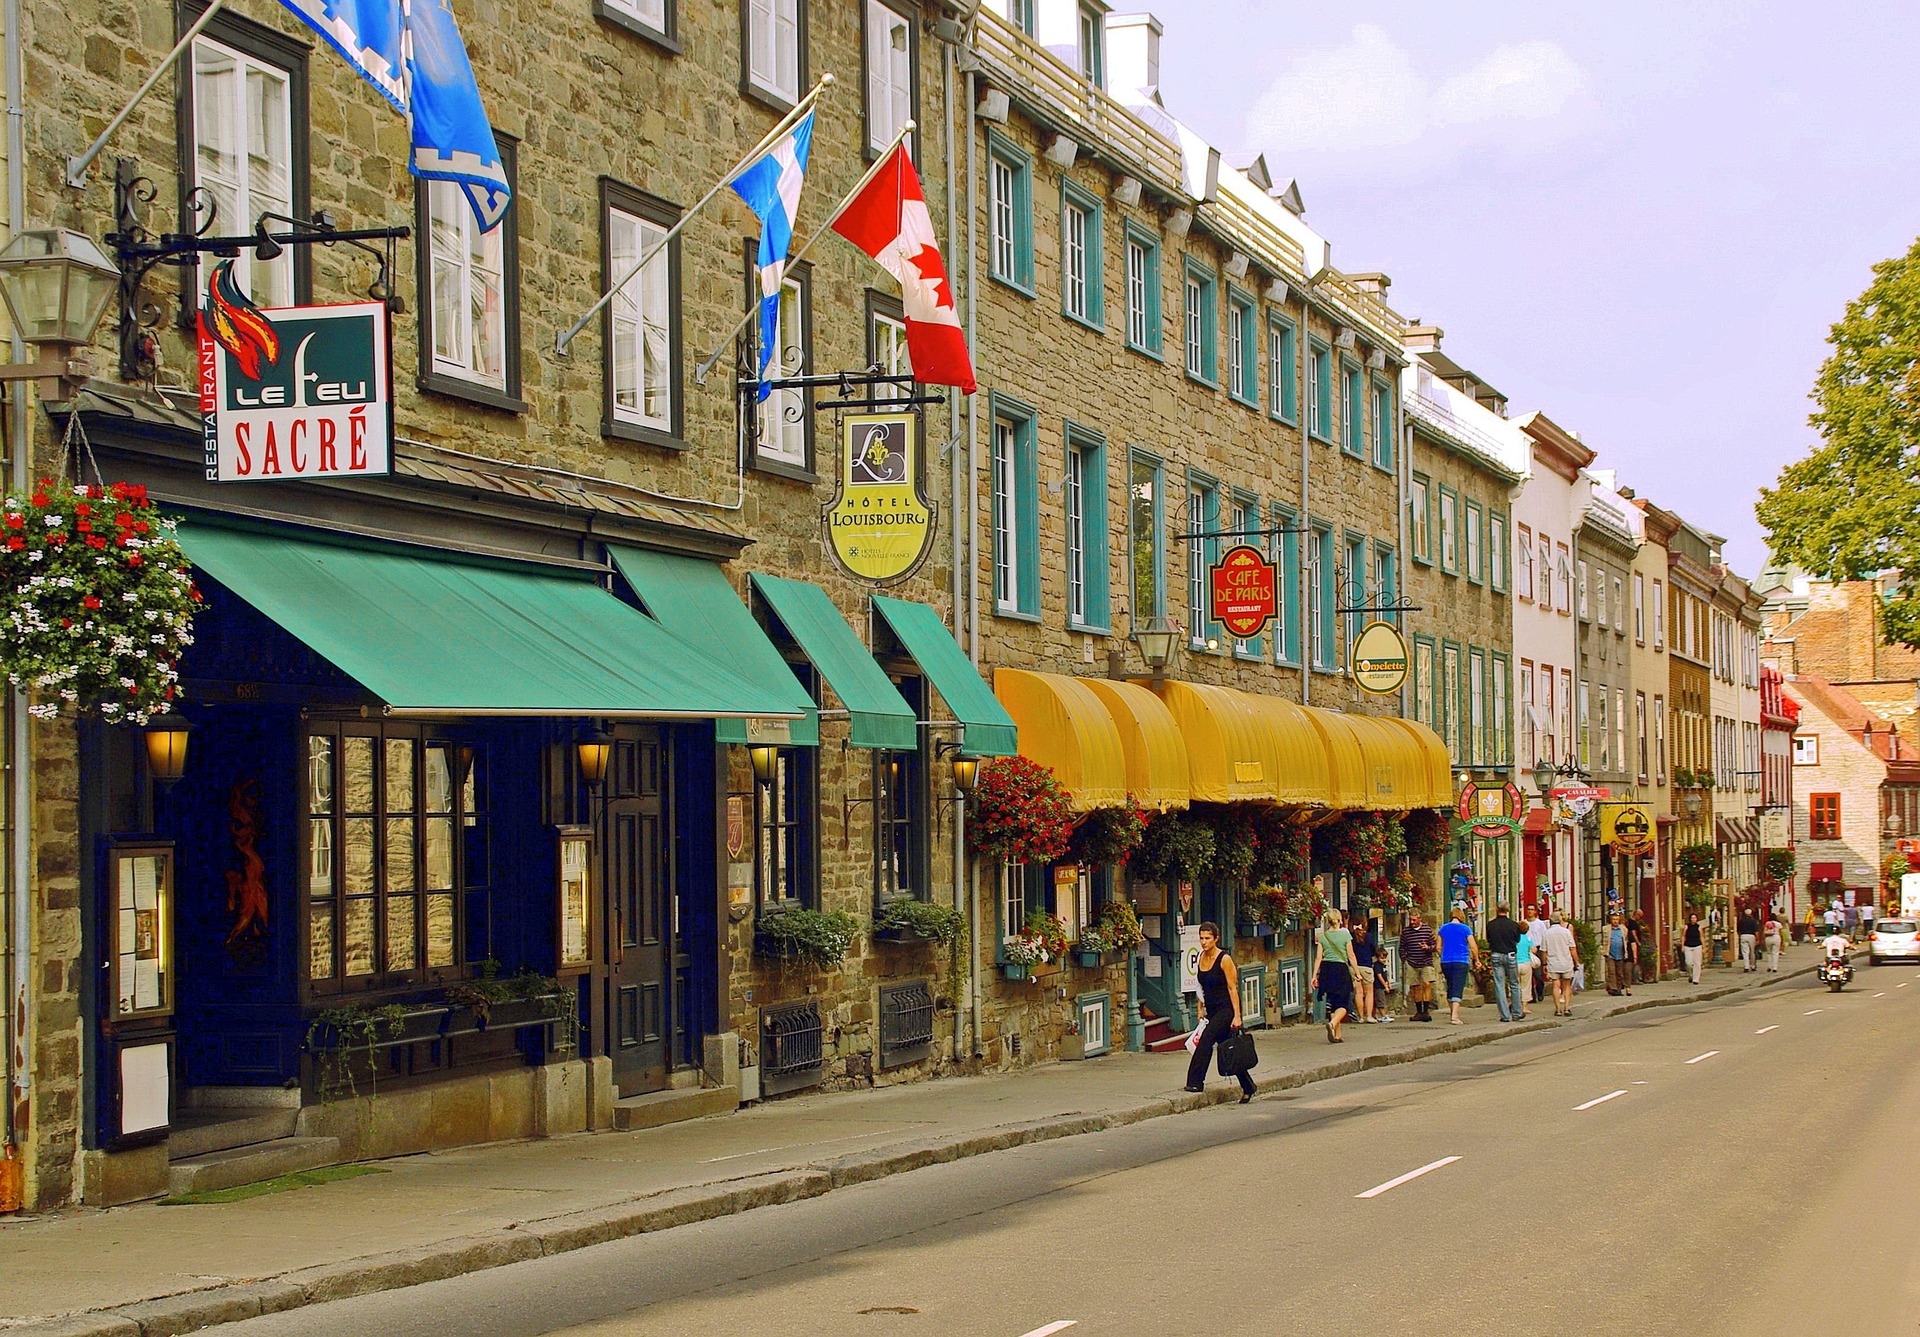 Quebec City (Photo Credit: DEZALB from Pixabay)